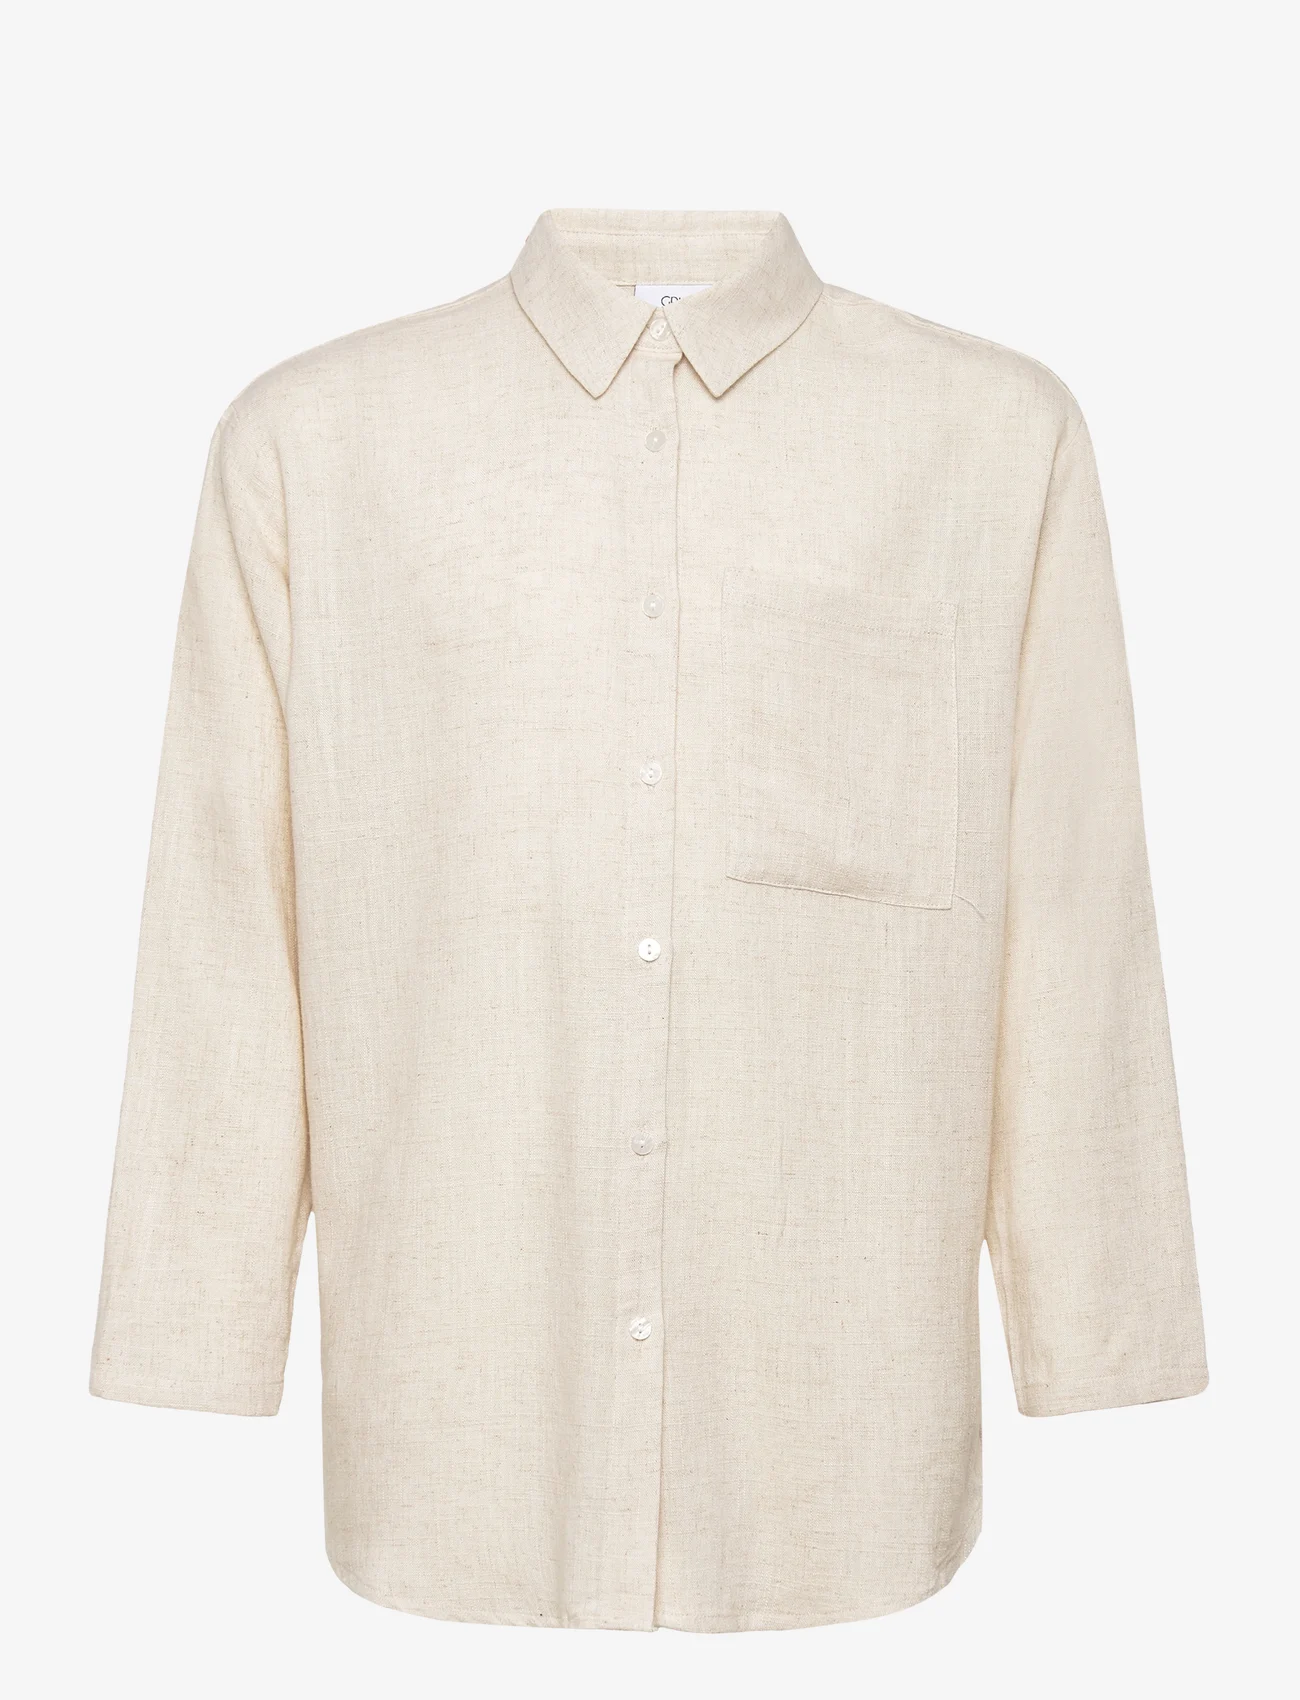 Grunt - Latti LS Linen Shirt - langærmede skjorter - sand - 0